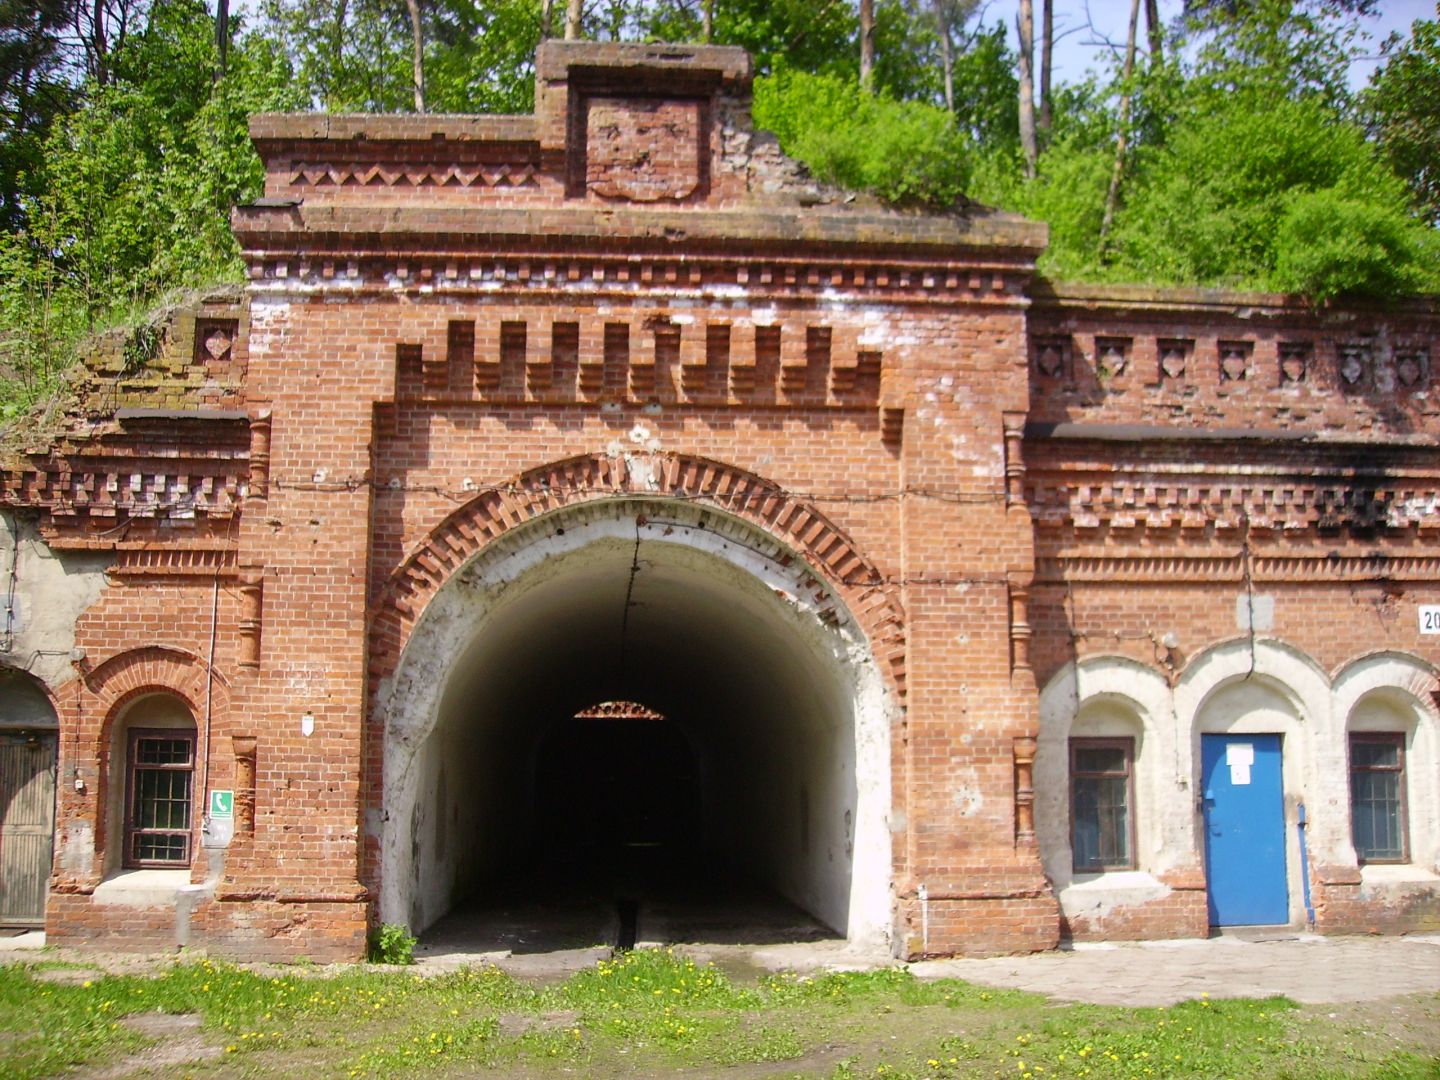 Fort I - brama wjazdowa